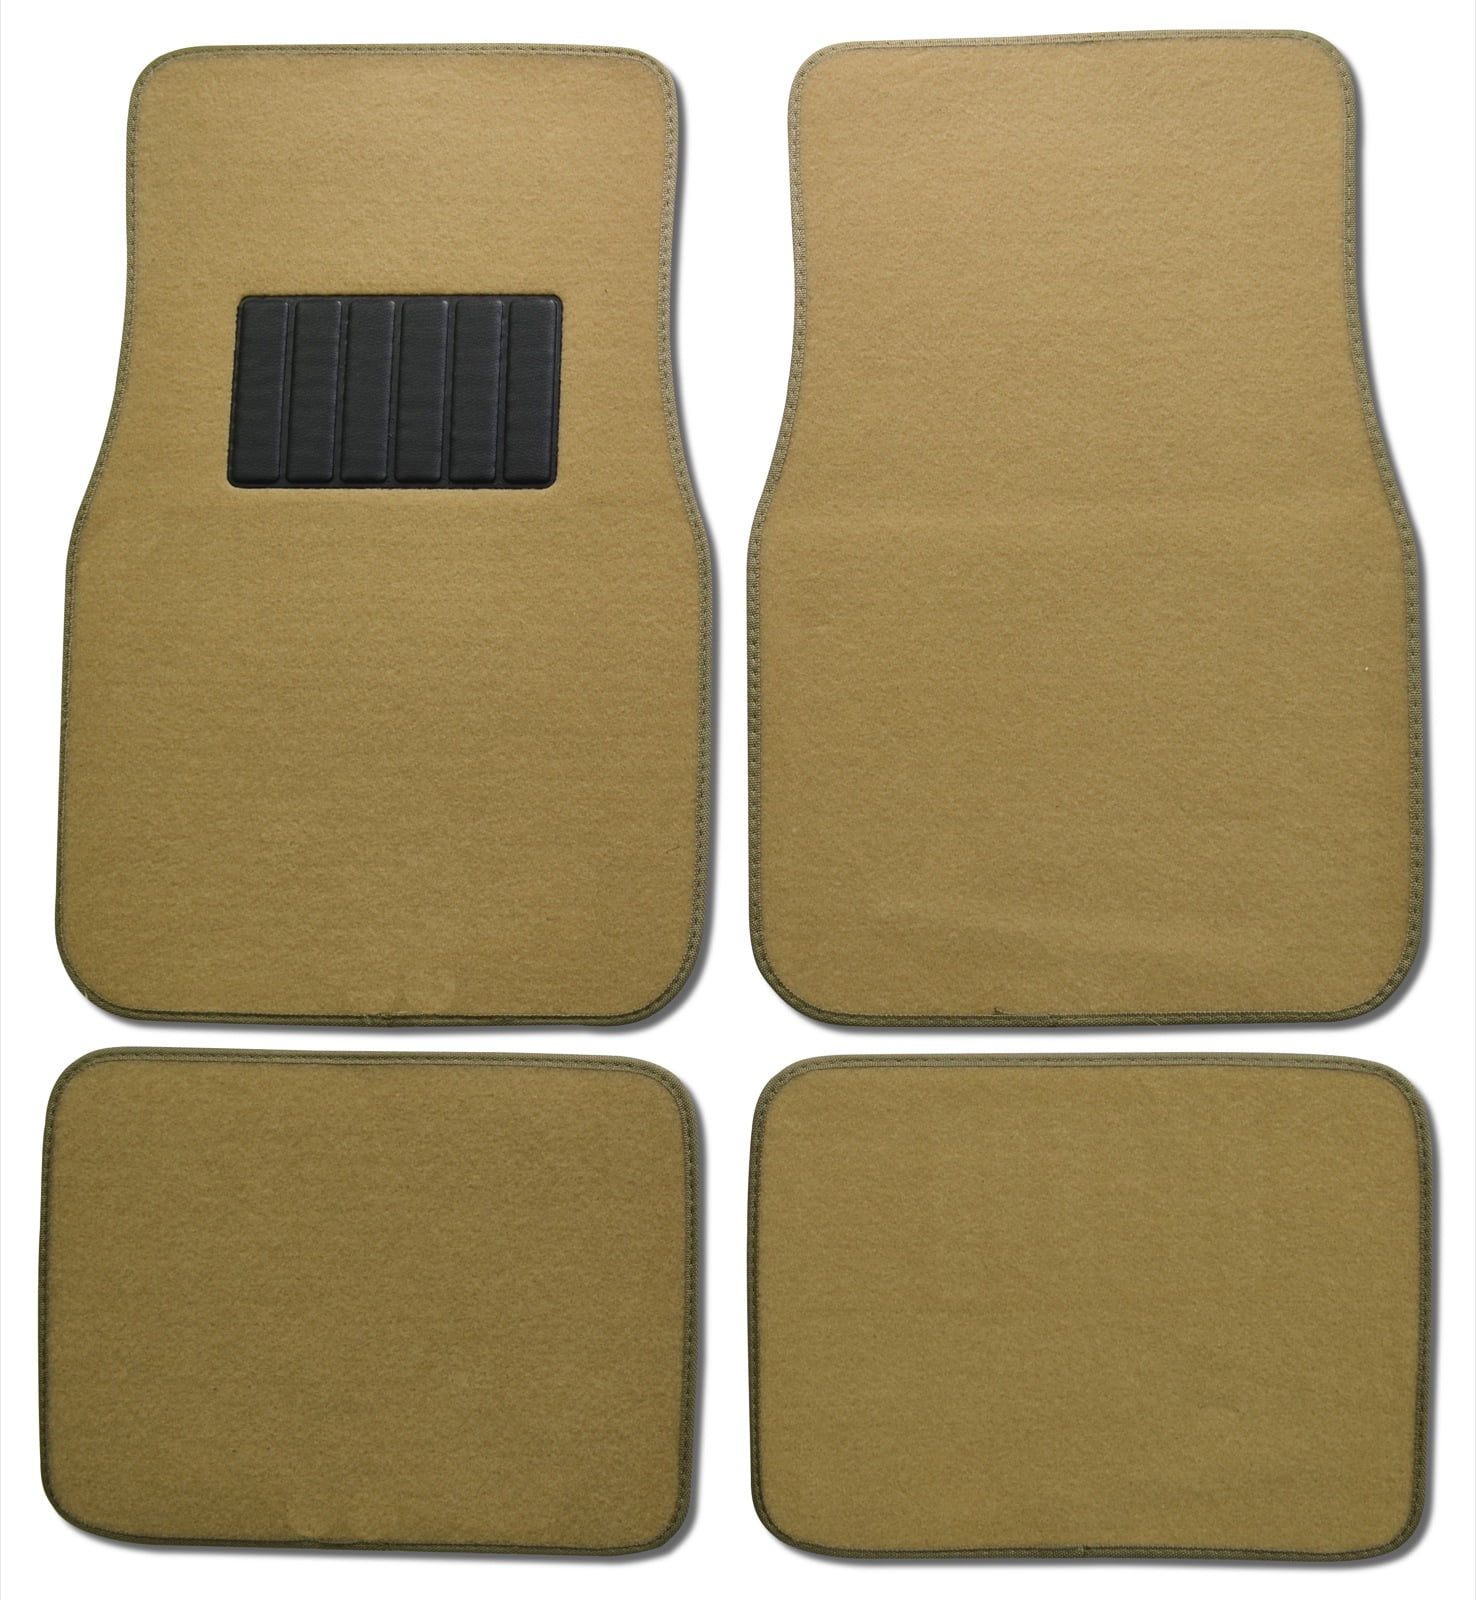 BDK Car Floor Mats 4 Pieces Carpet Protection - Universal Fit for Car, SUV,  VA & Truck, Front & Rear 